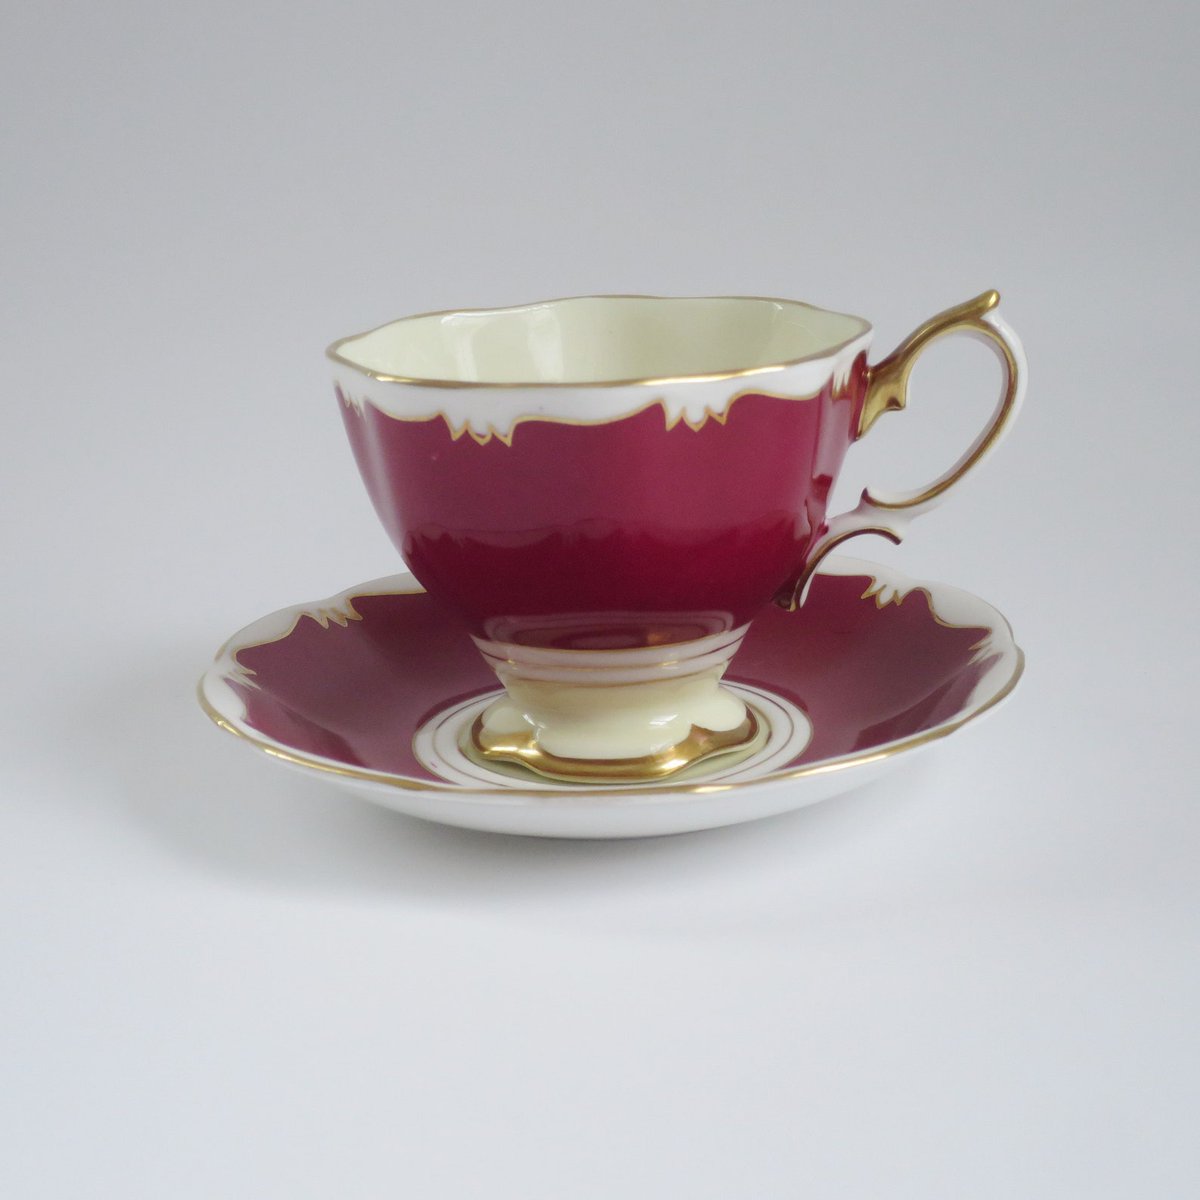 Vintage Tea Cup and Saucer by Royal Albert England, Burgundy Cream and White Teacup Set etsy.me/3UIX2Bn #SMILEtt23 #Wiseshopper #EpiconEtsy #Etsyteamunity